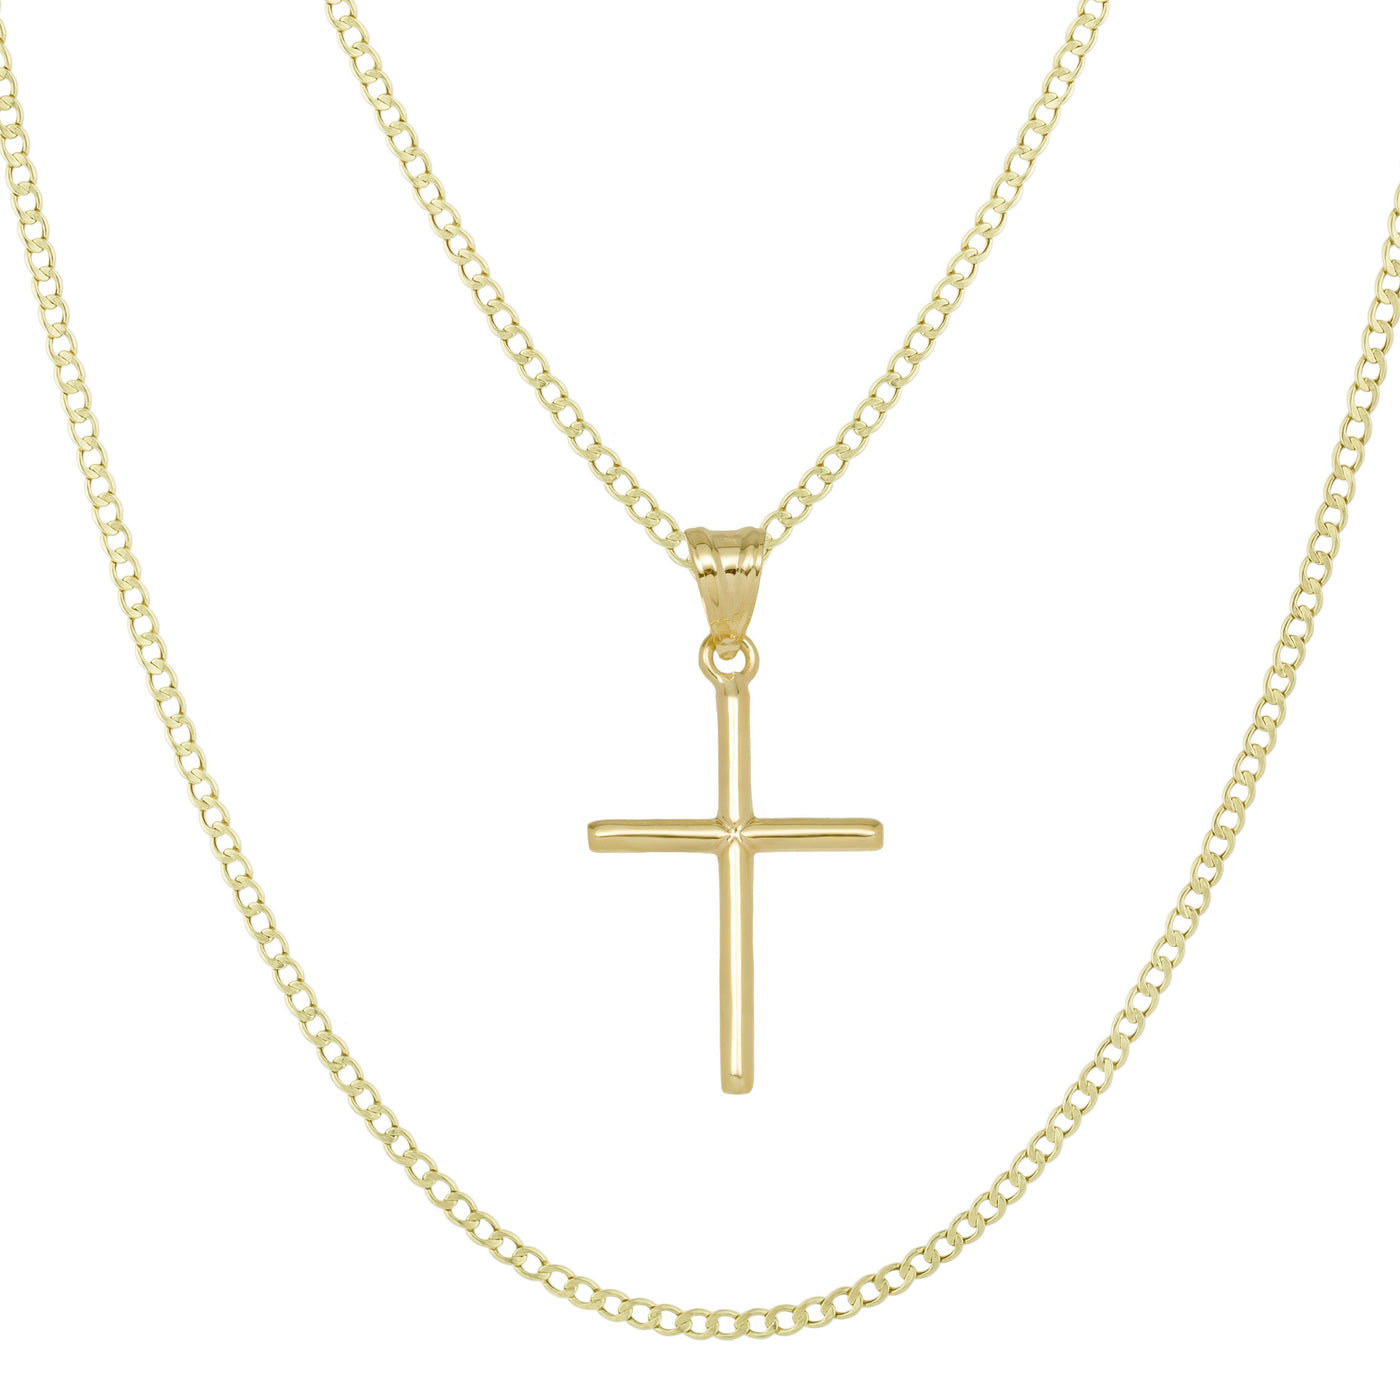 1 1/4" Diamond-Cut Cross Pendant & Chain Necklace Set 14K Yellow White Gold